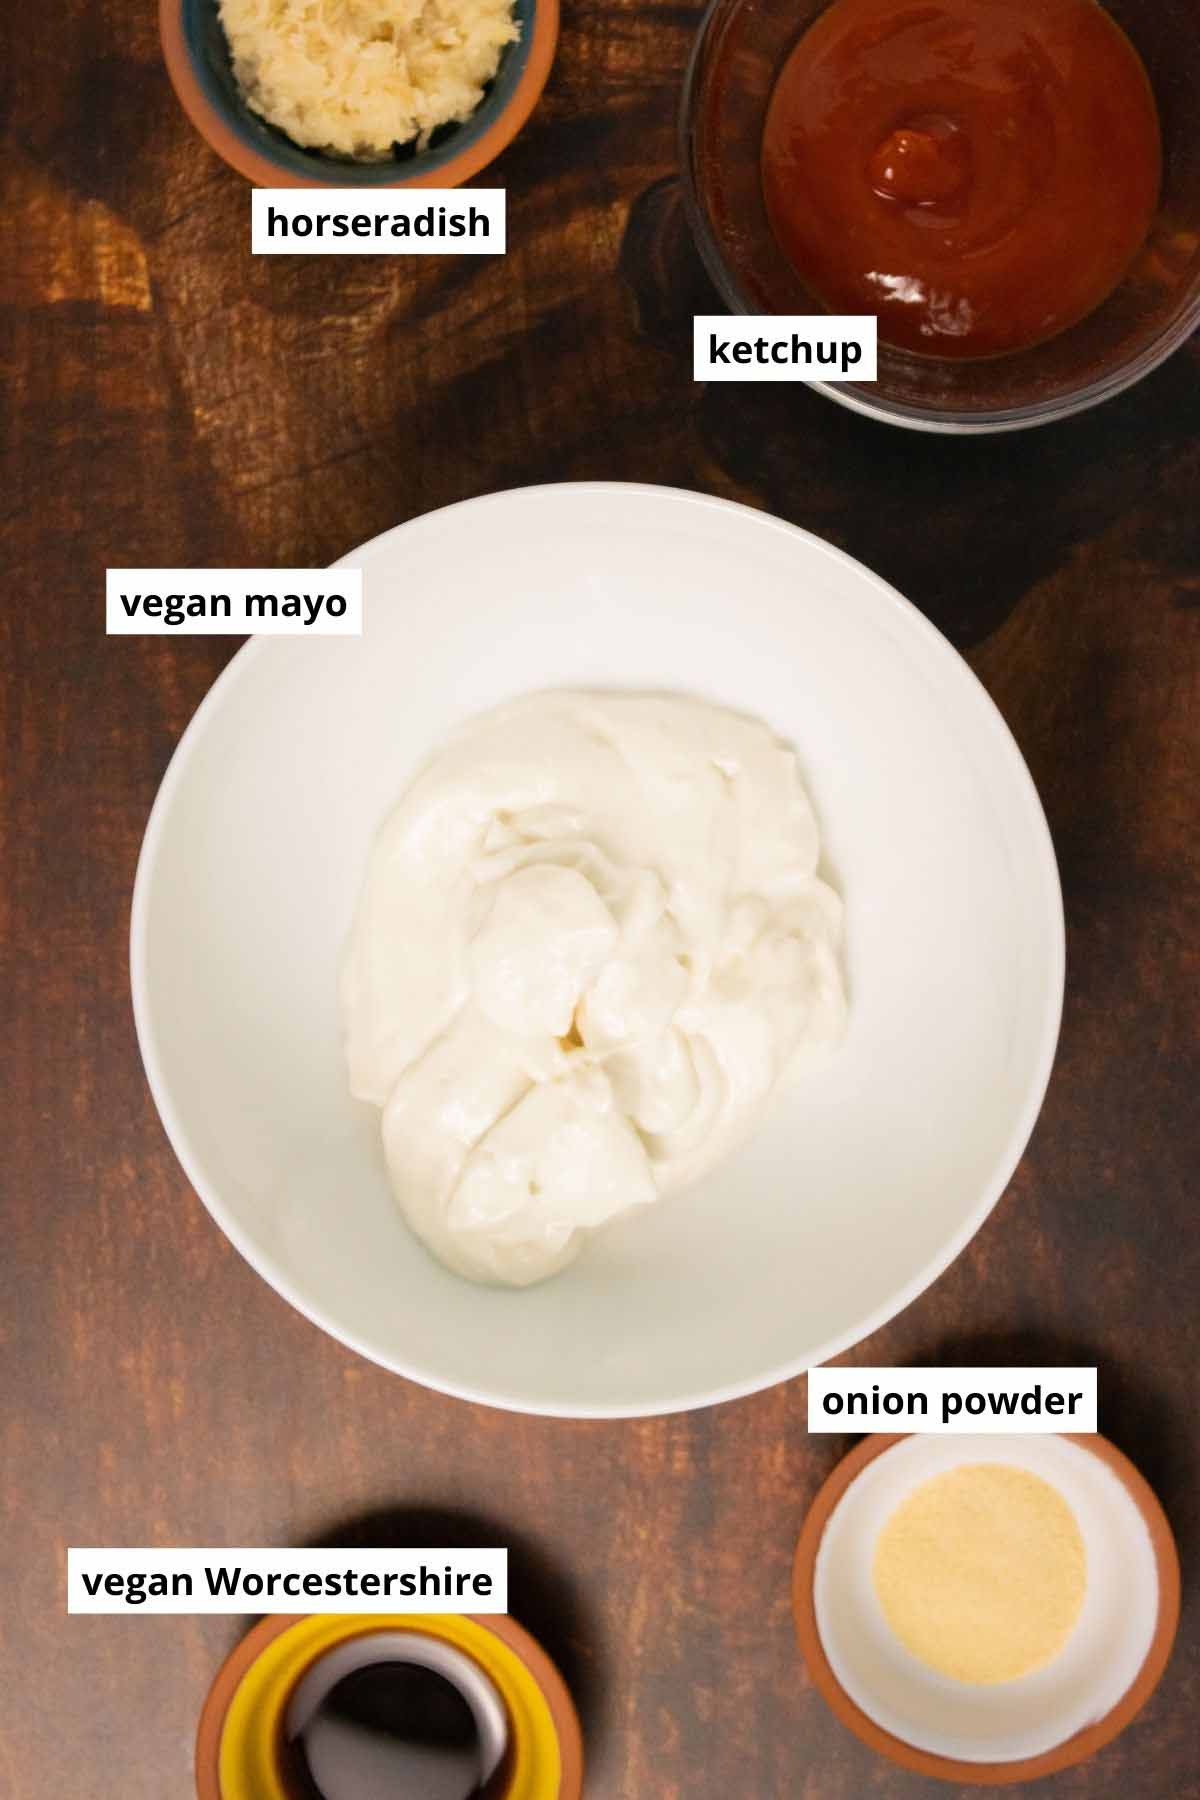 vegan mayo, ketchup, and seasonings in bowls on a wooden table